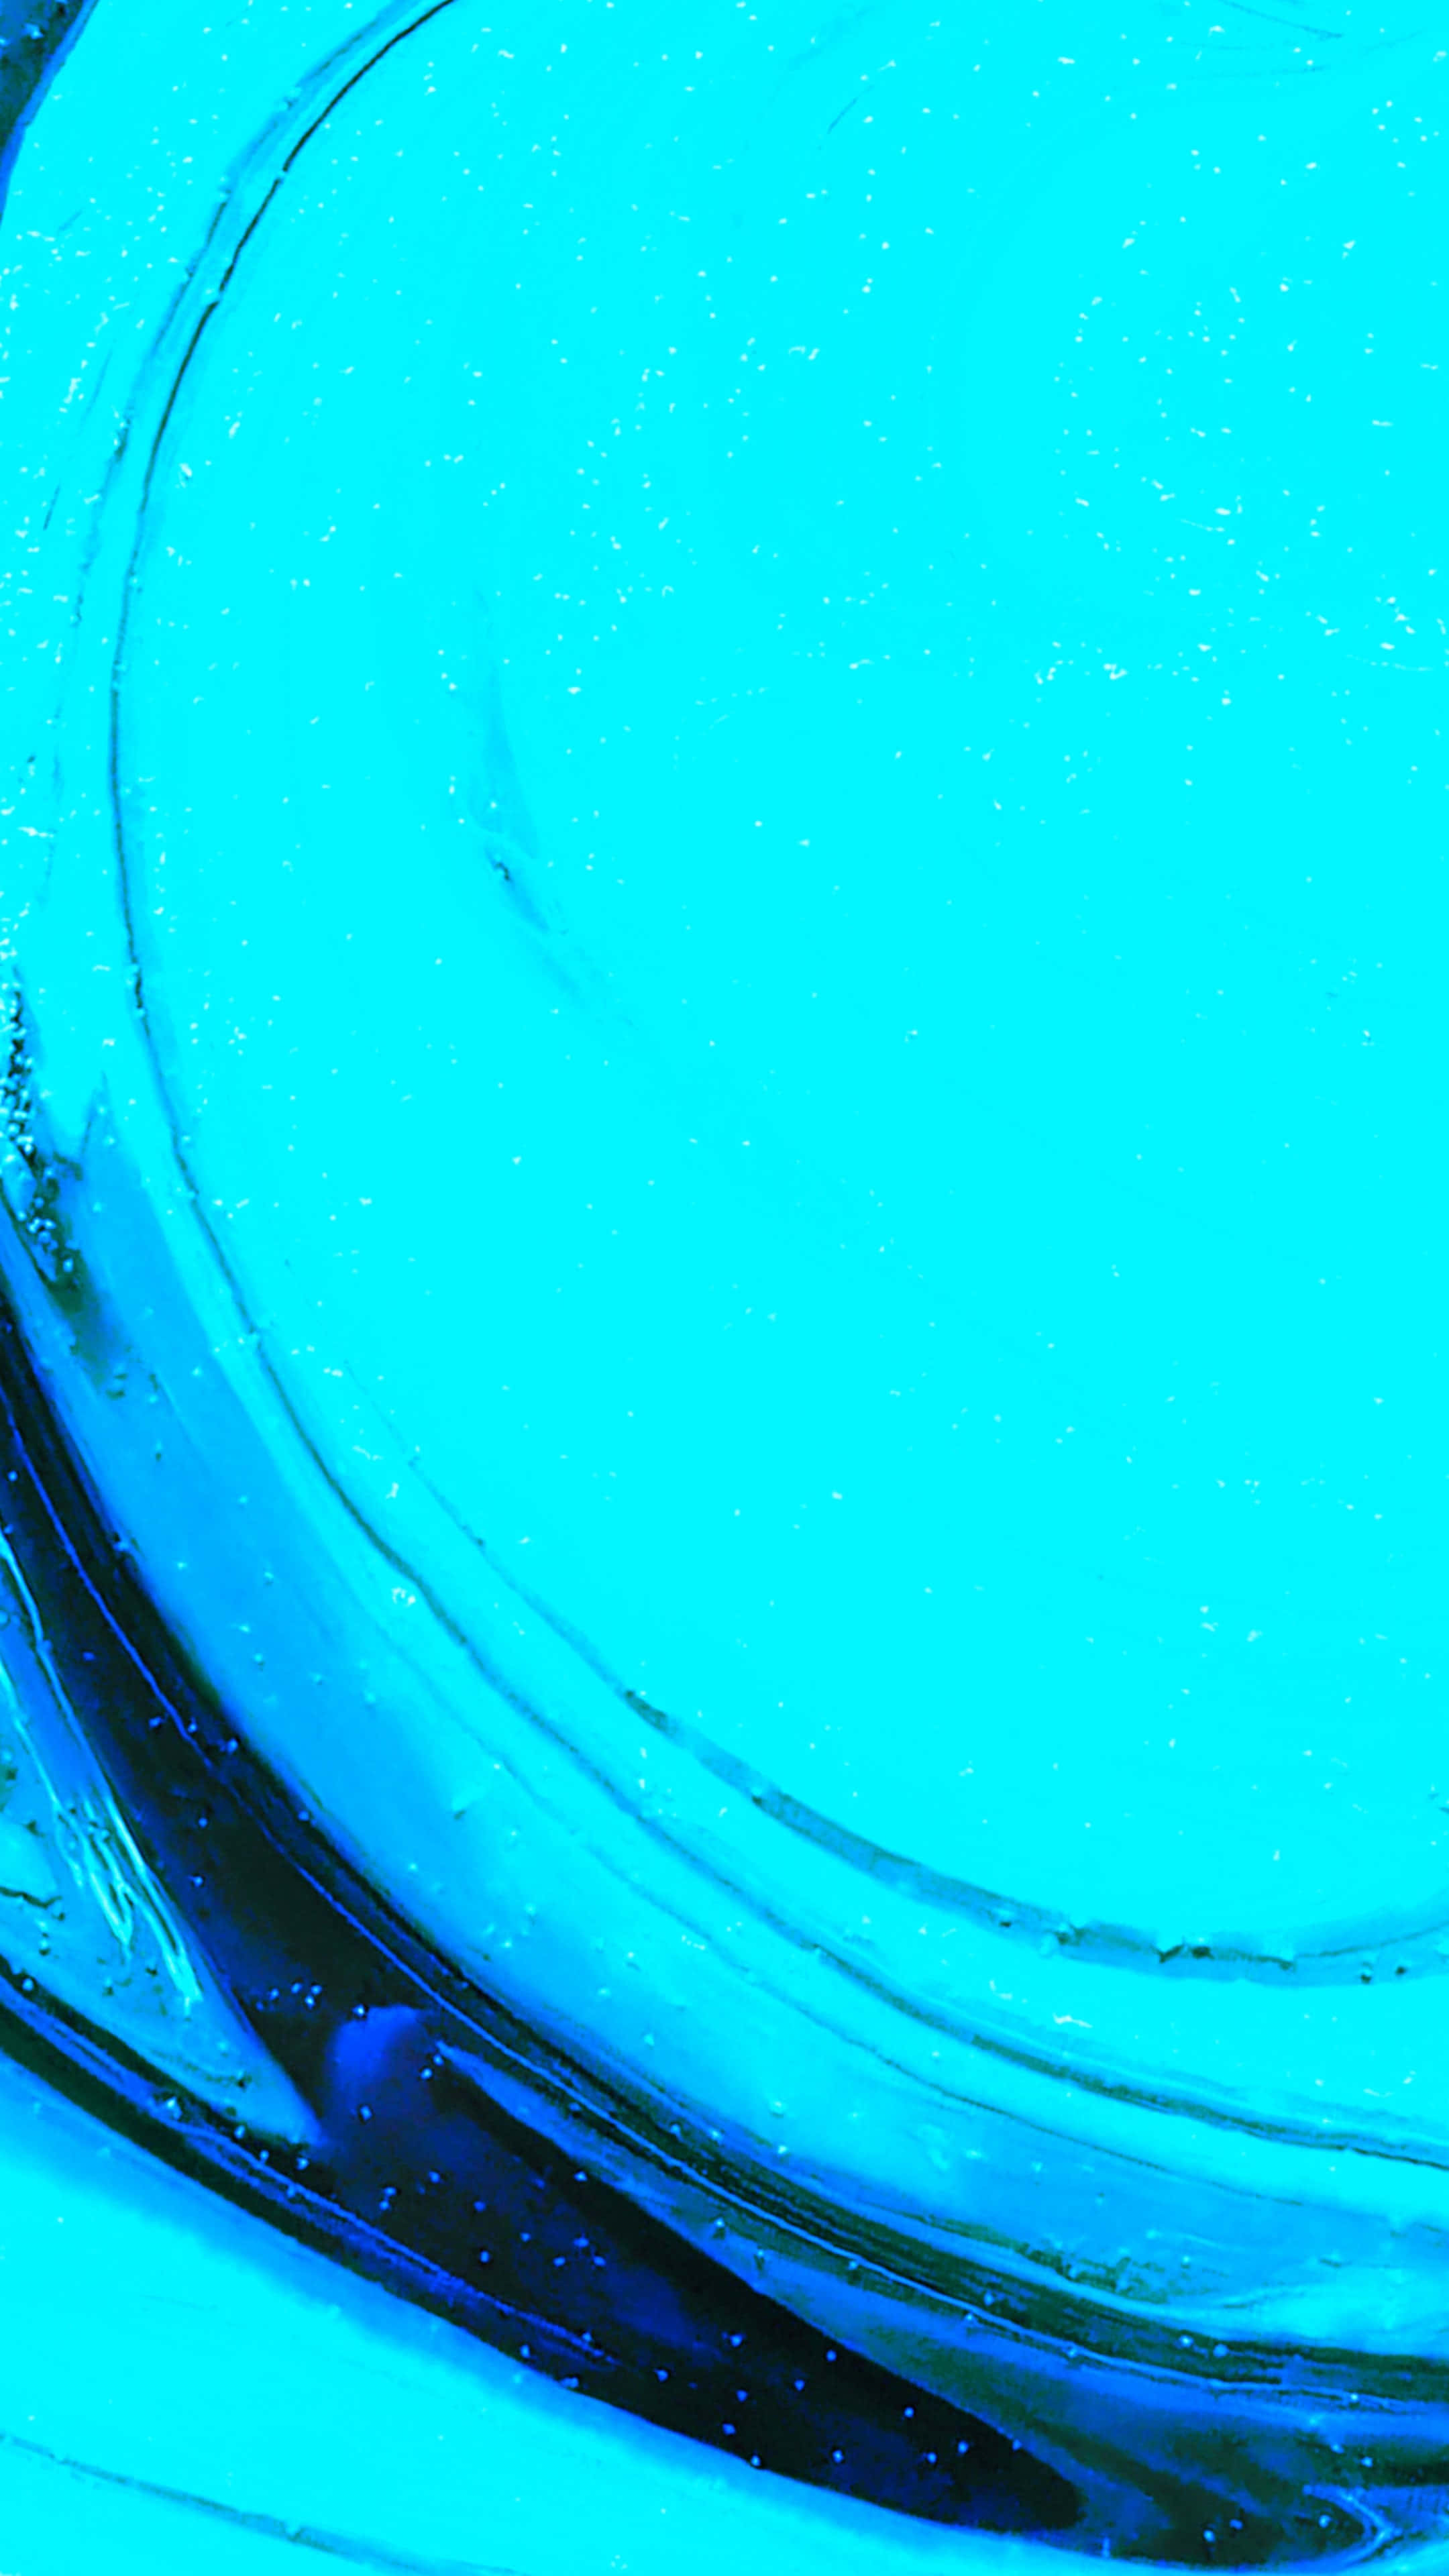 Light Blue 2160 X 3840 Background